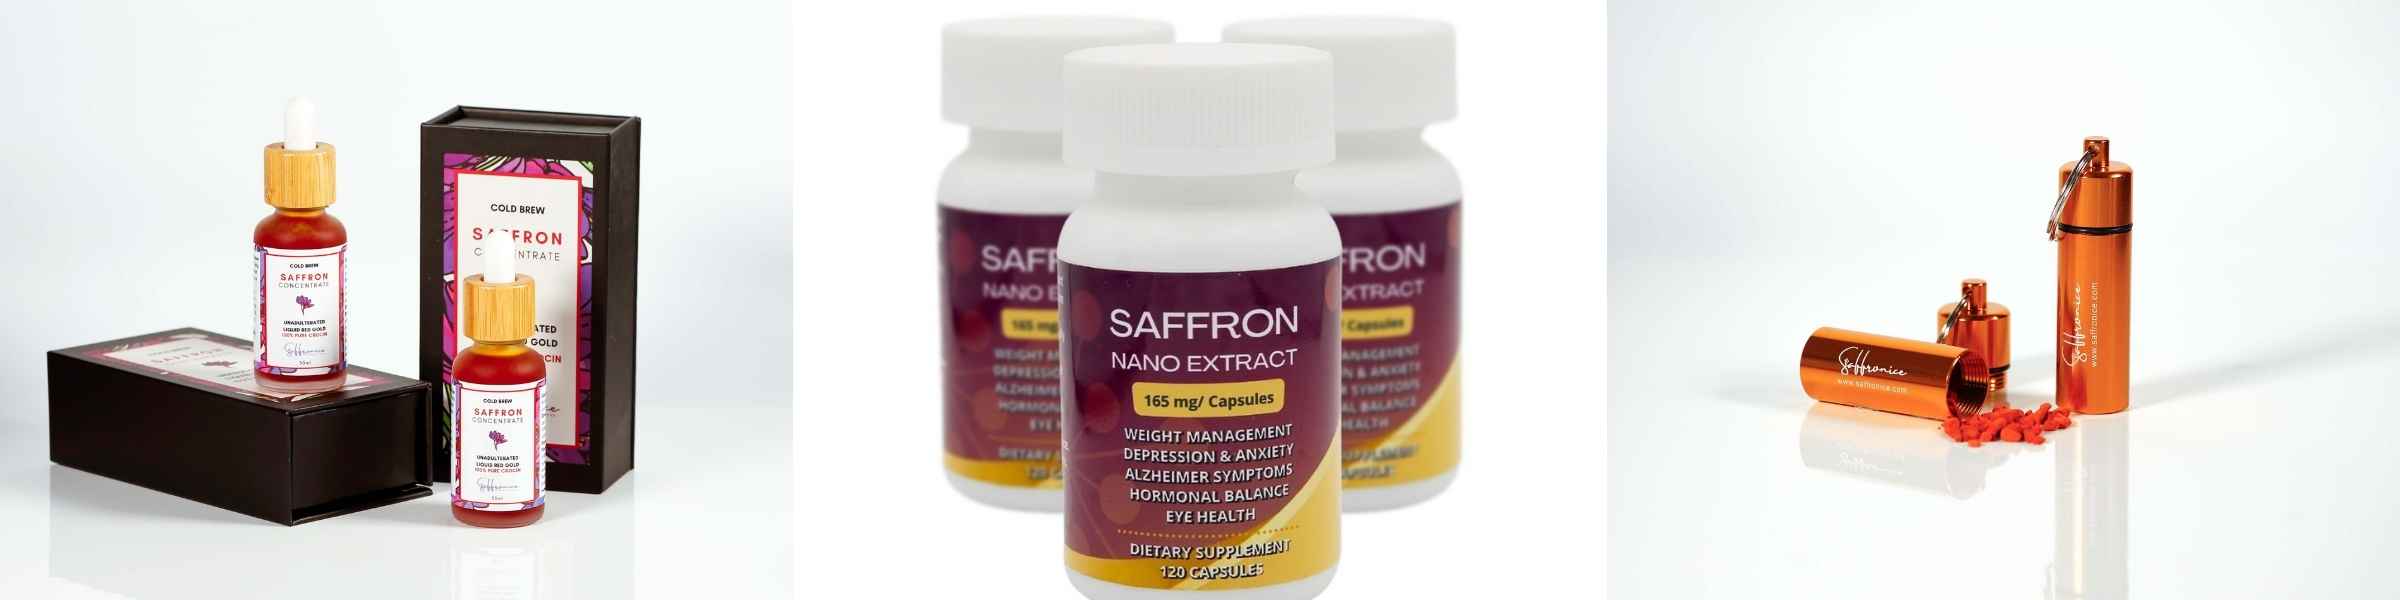 Saffron Extract